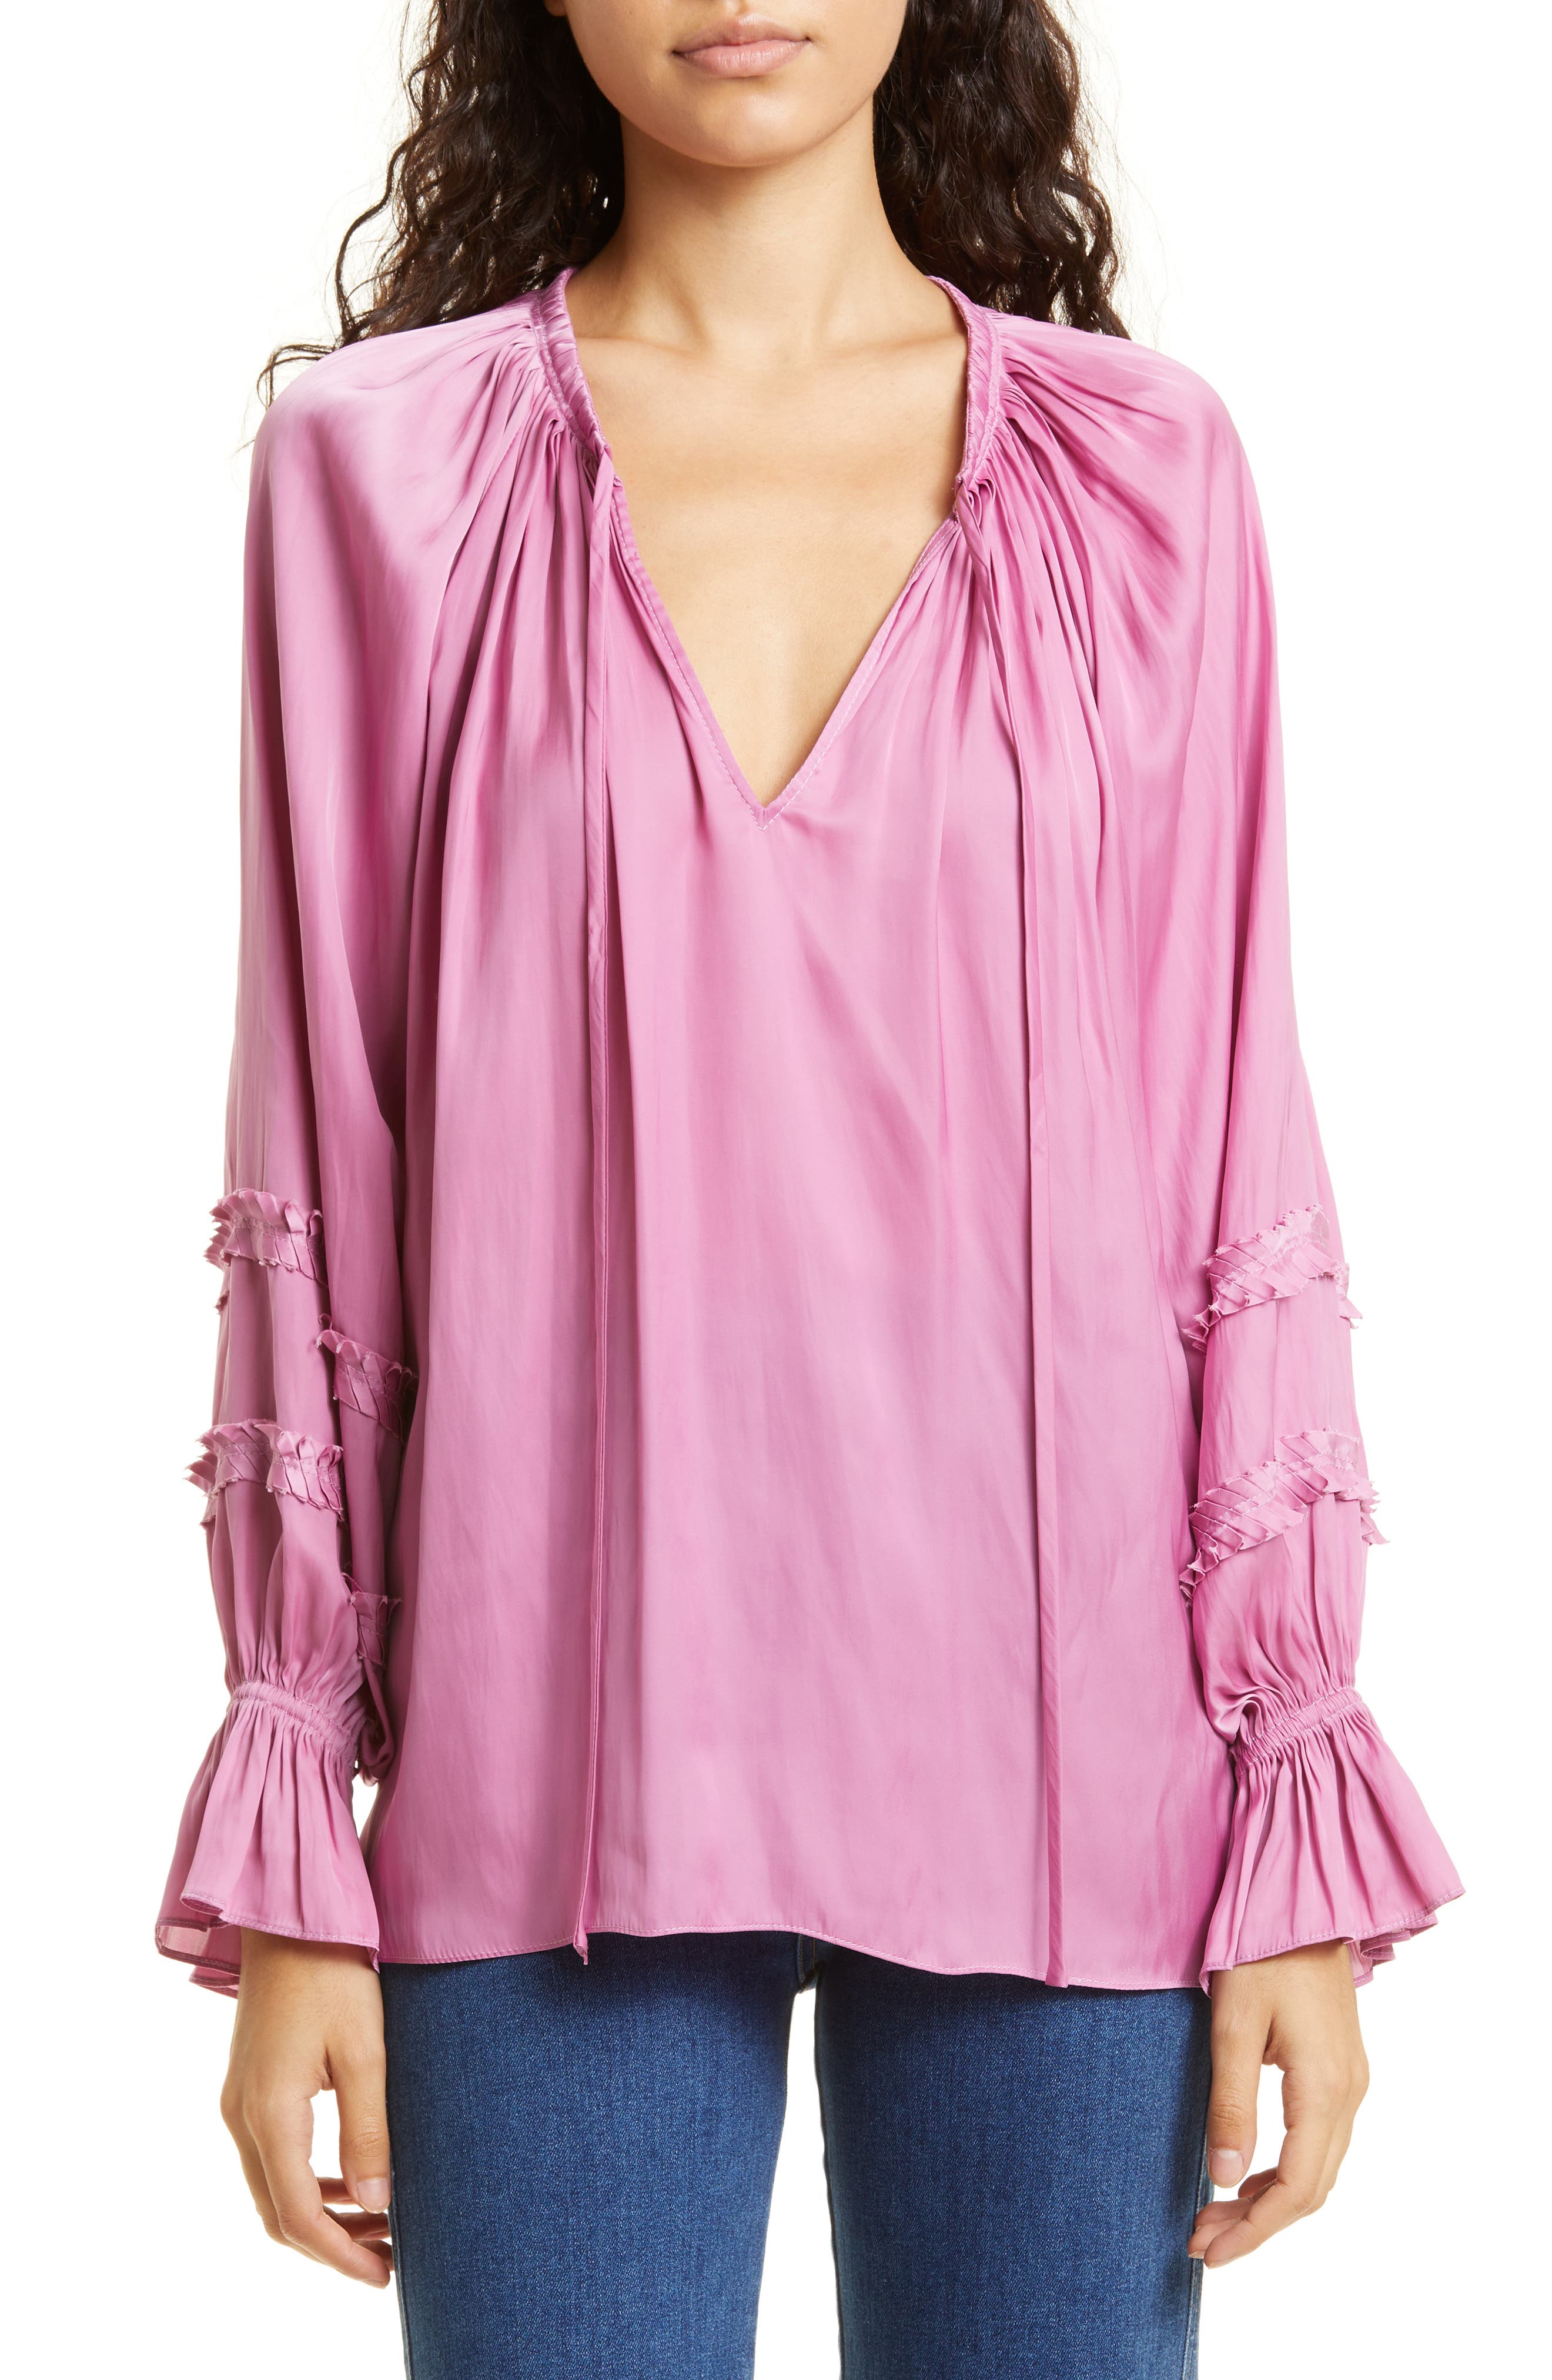 ASOS Damen Kleidung Tops & Shirts Bodys Angel sleeve bodysuit in pink abstract print 